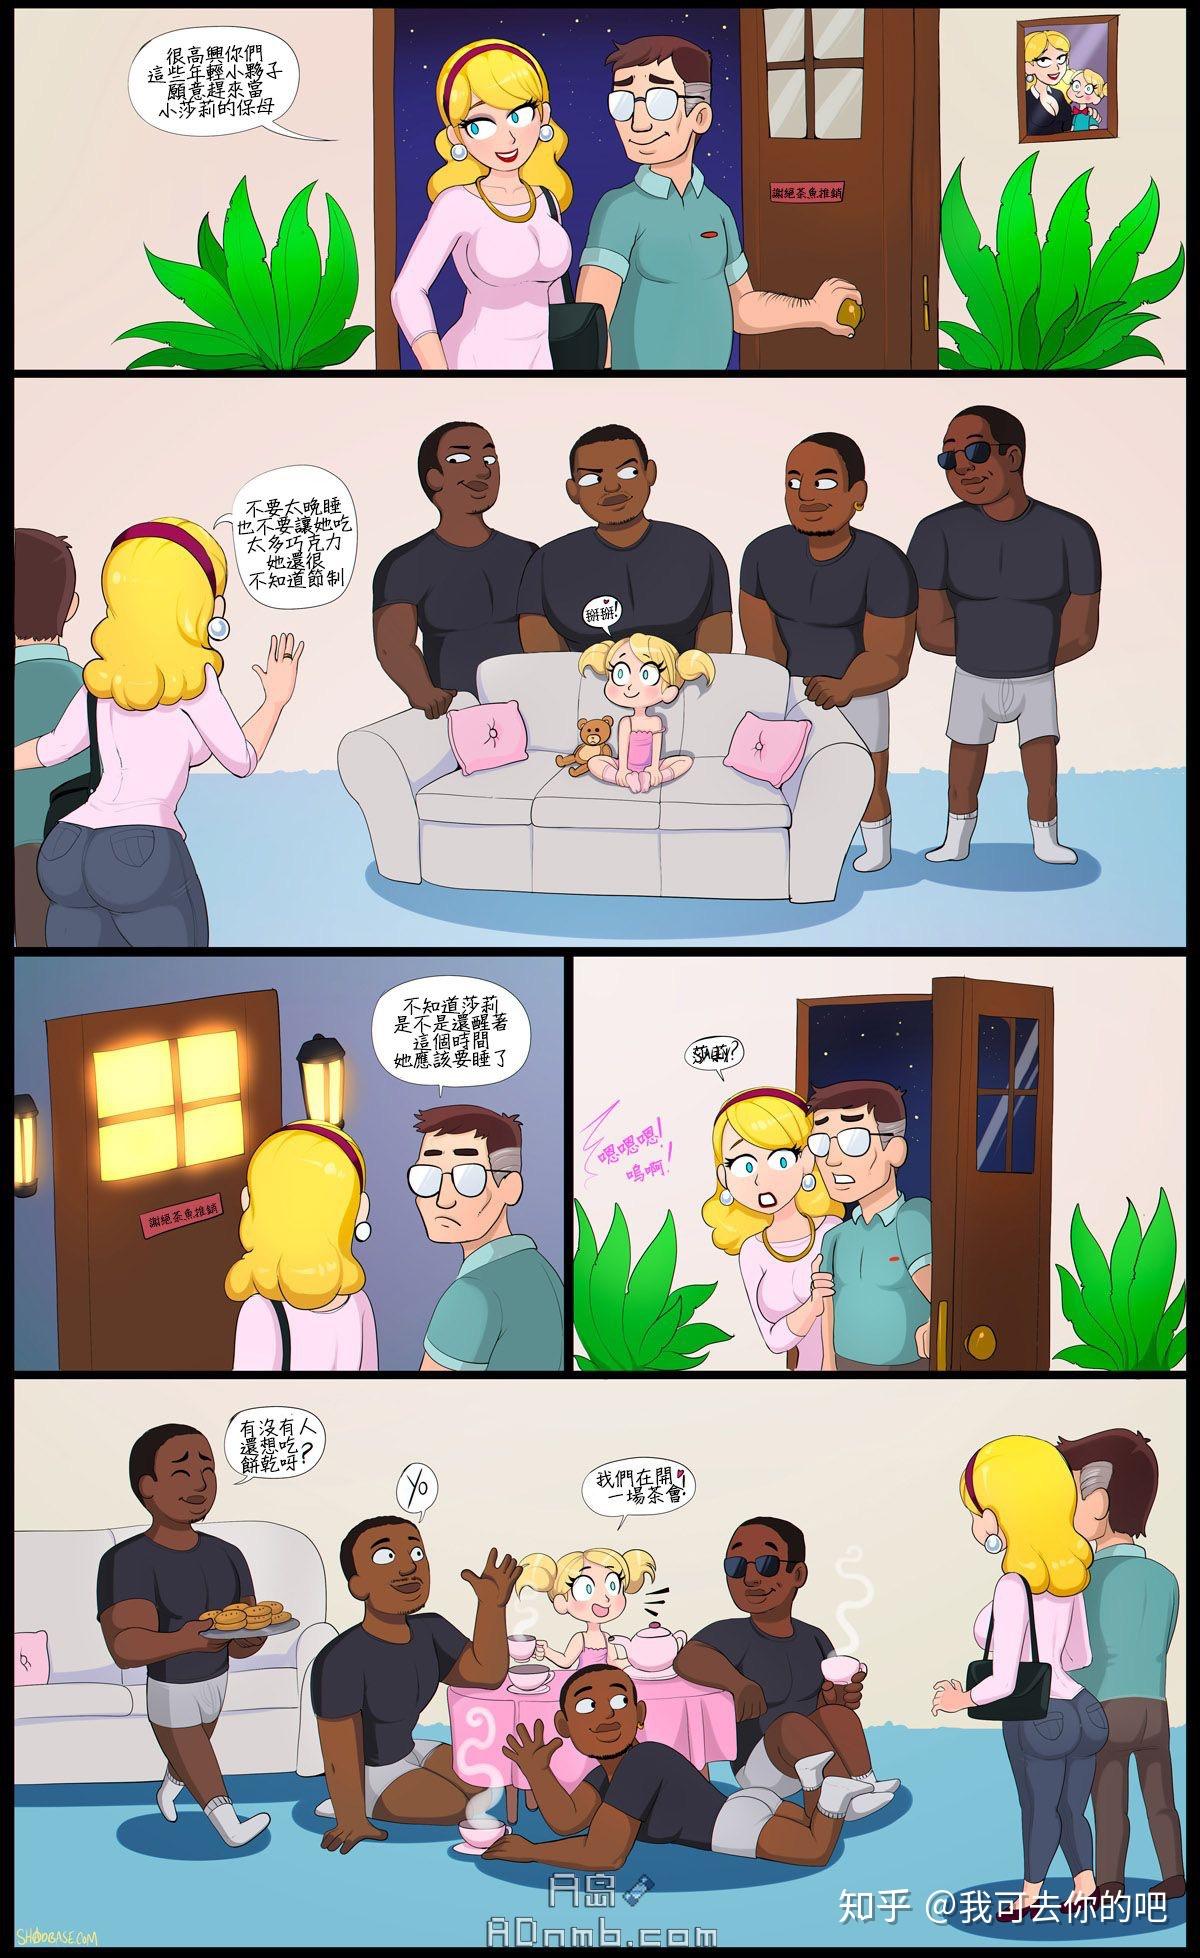 yaoi gay sex cartoon